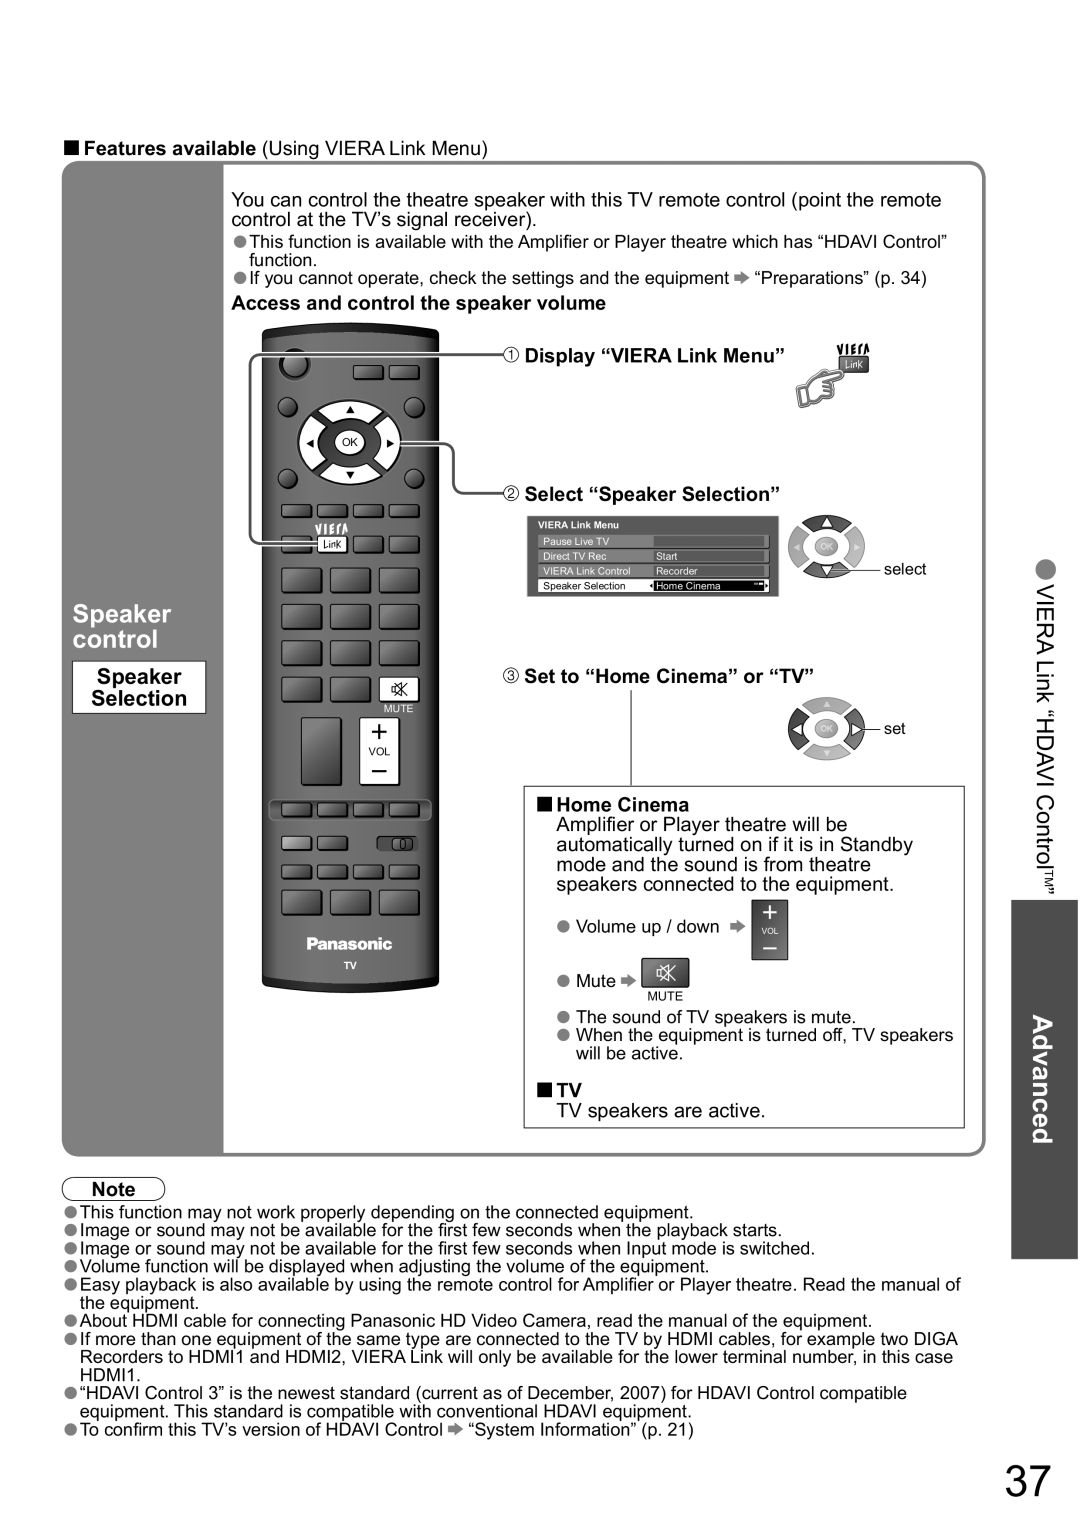 Panasonic TX-32LXD8A Speaker, control, Selection, Advanced, VIERA Link “HDAVI ControlTM”, Display “VIERA Link Menu”, Mute 